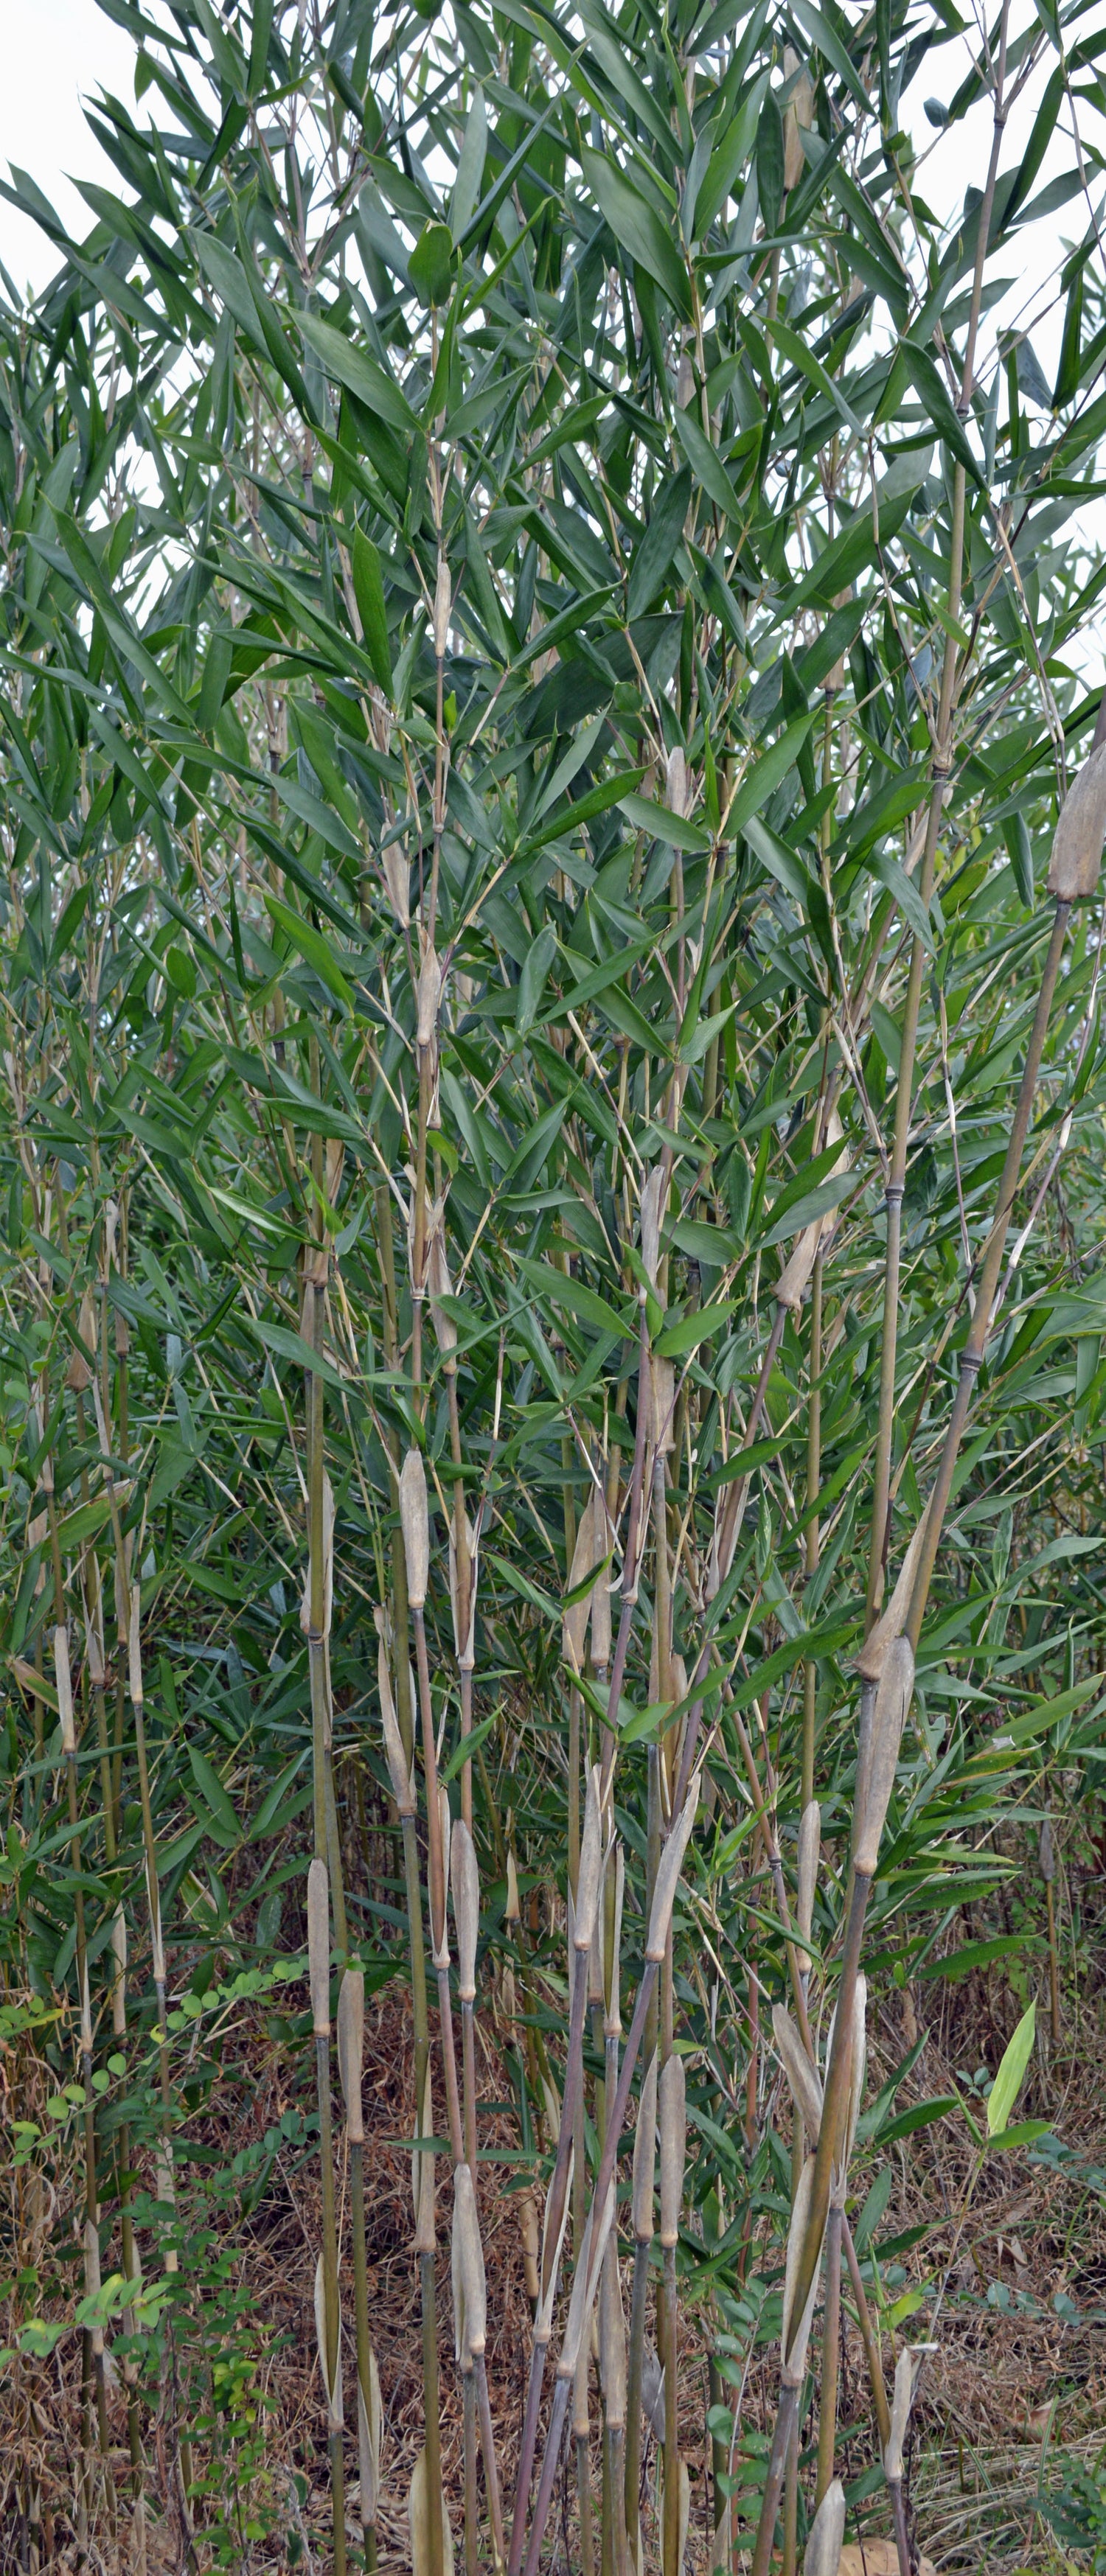 Upclose image of bamboo showing new shoots losing the brown sheath. Dark green foliage. 